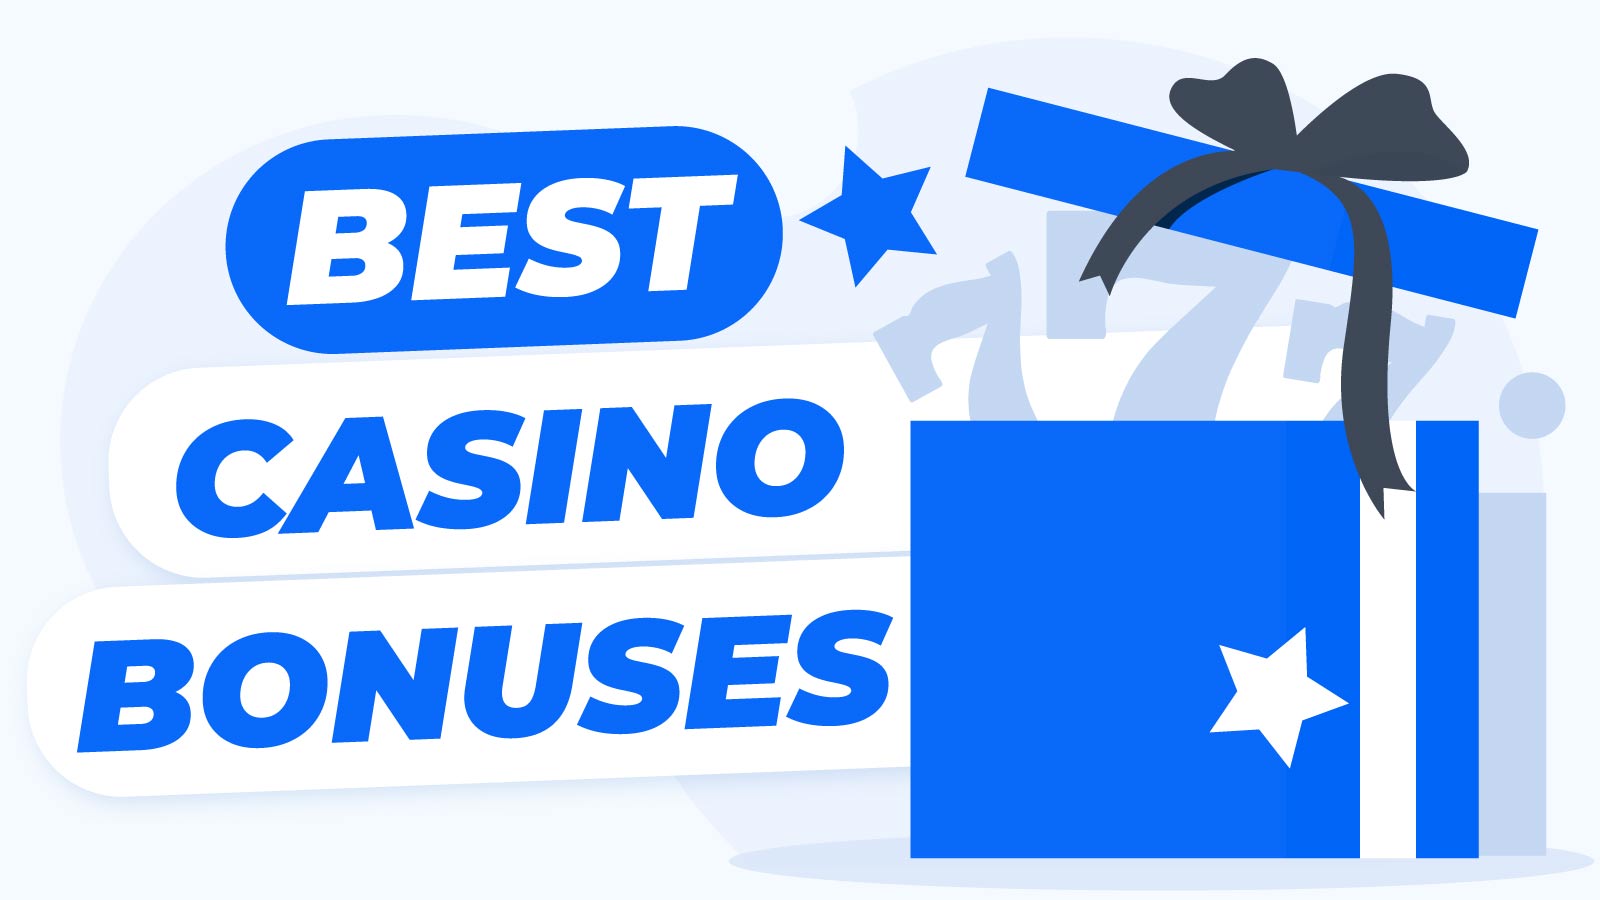 Best Casino Bonuses in Ireland for 2023